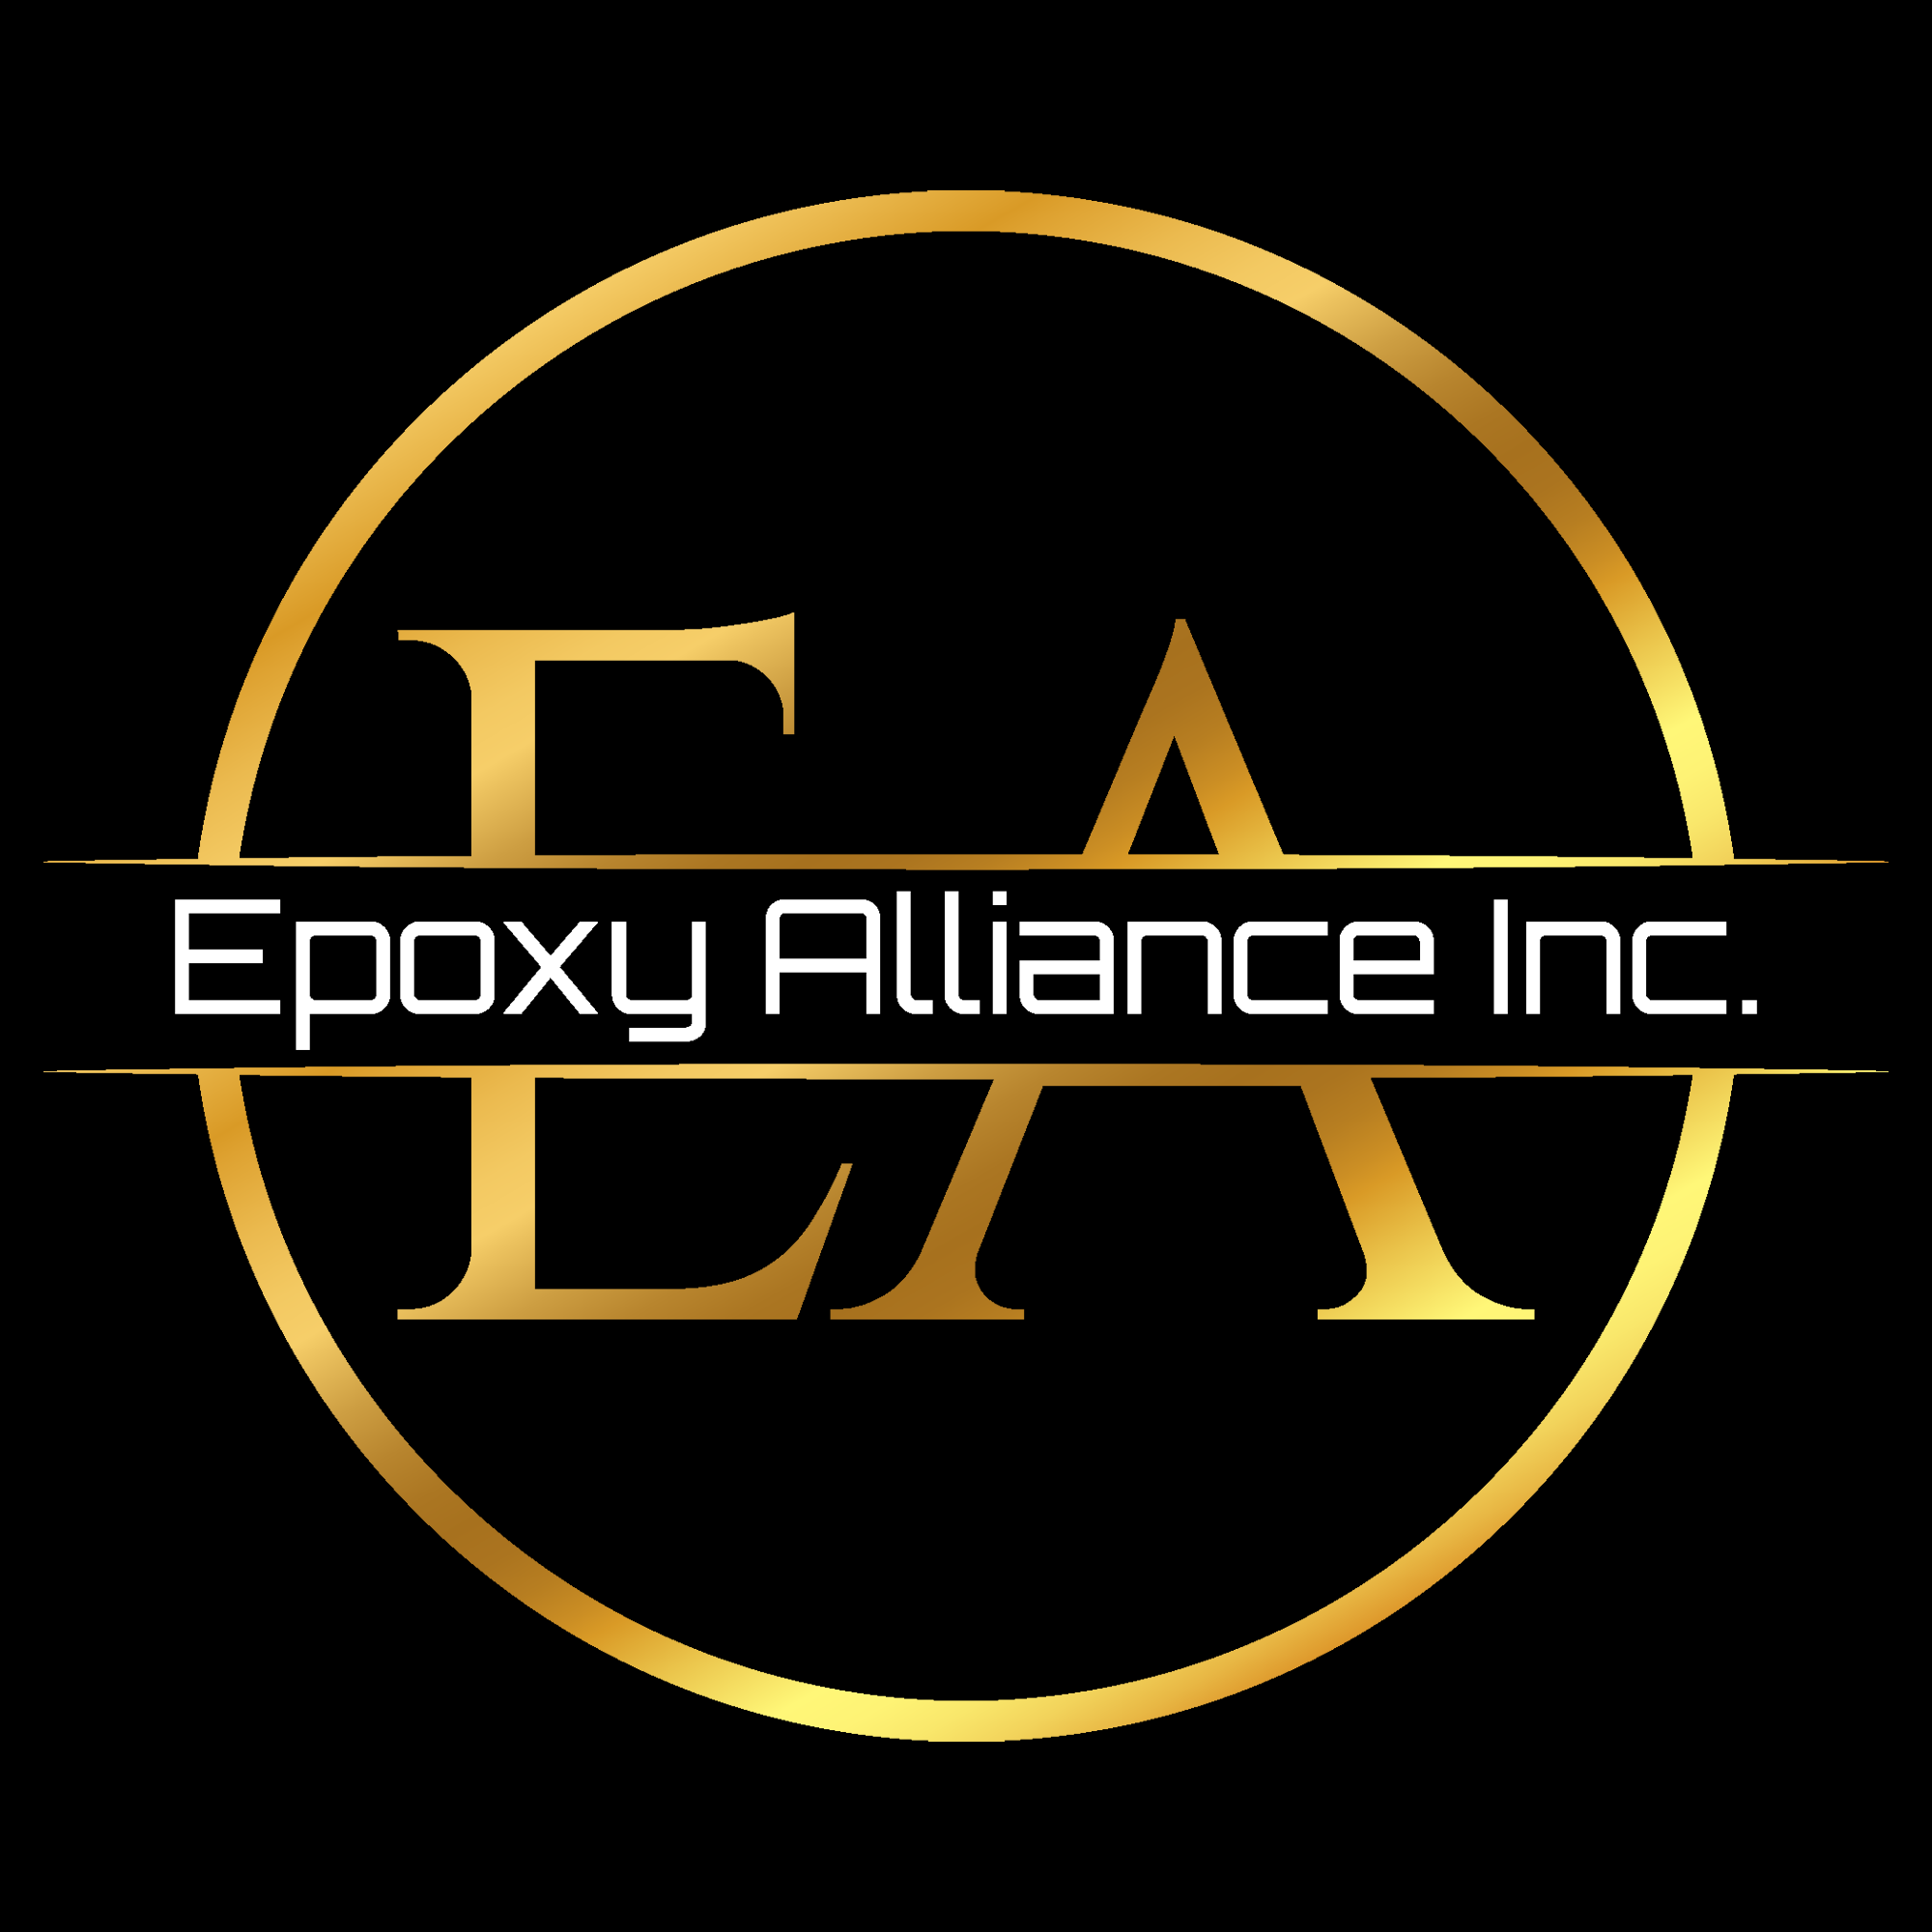 Epoxy Alliance's logo